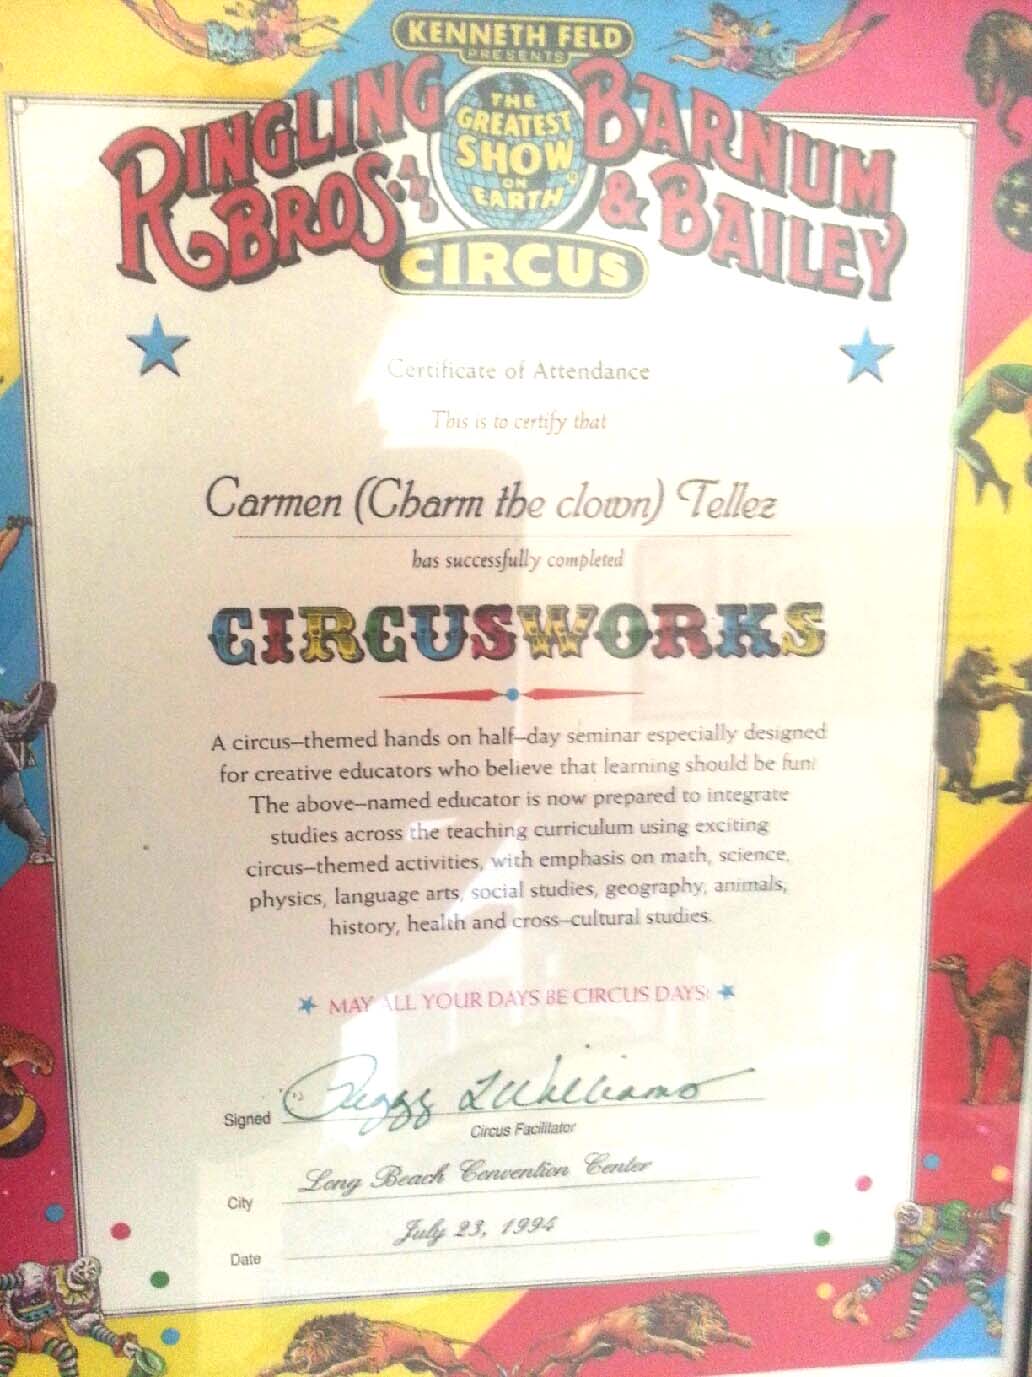 Certificate ringling circus works for Carmen Tellez